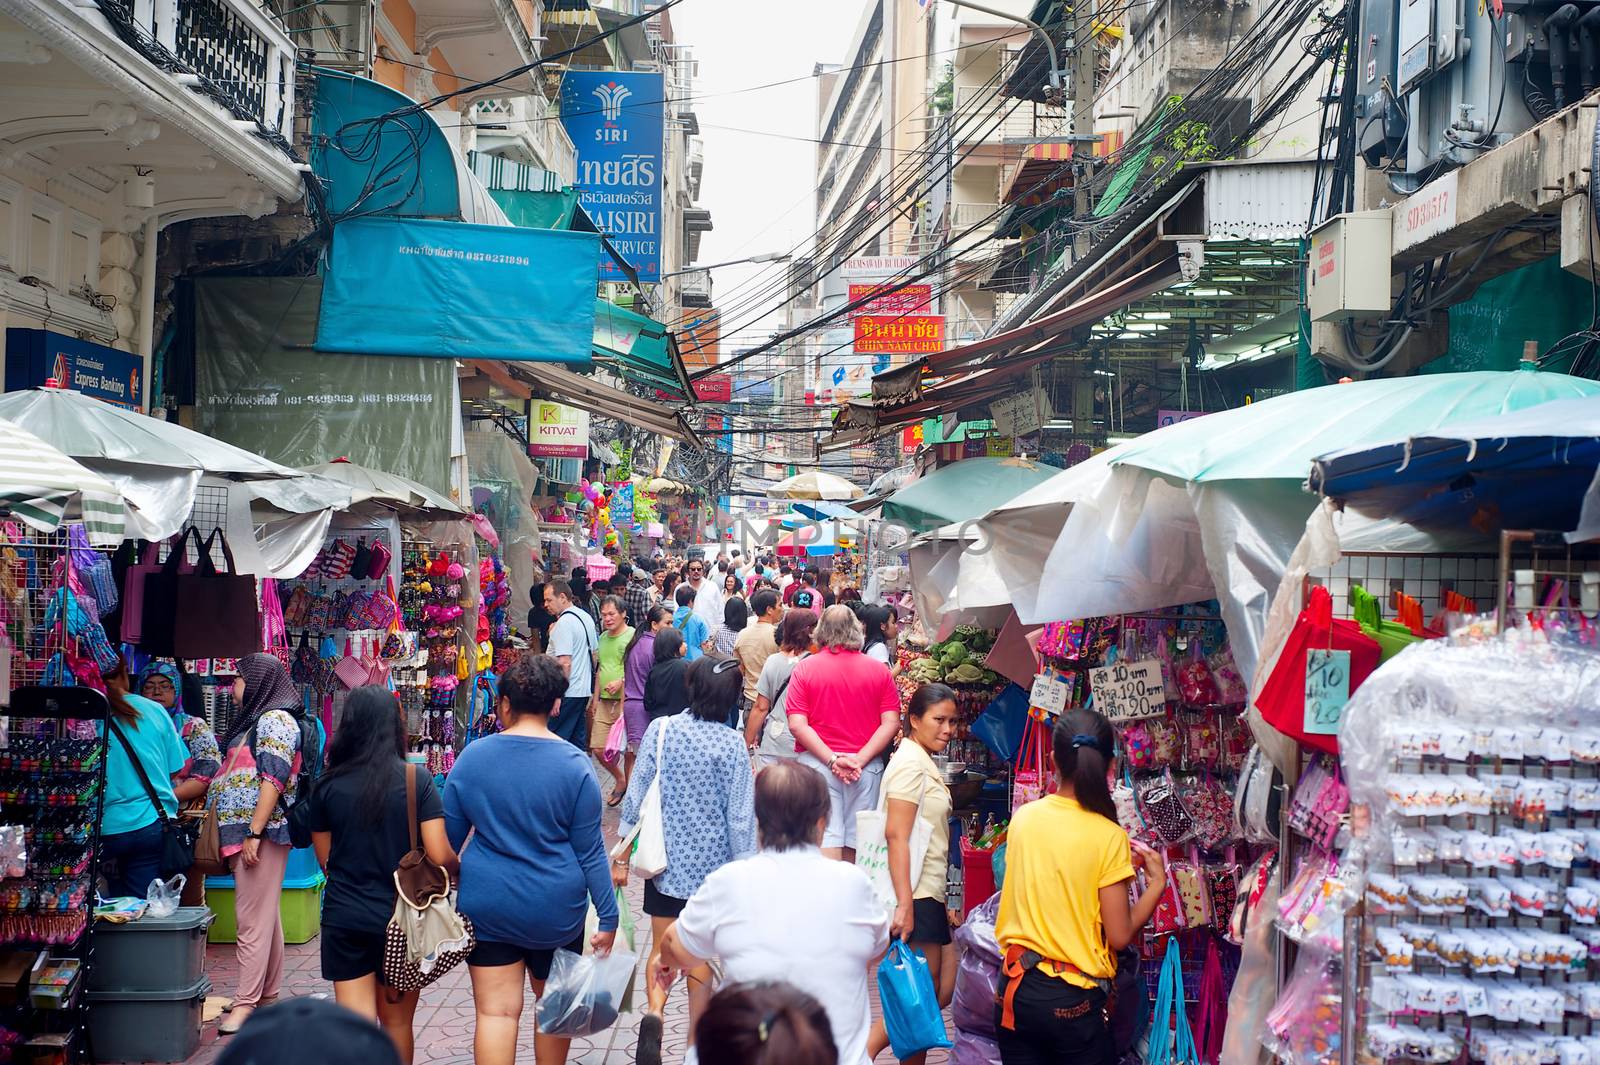 Flee market, Bangkok by joyfull